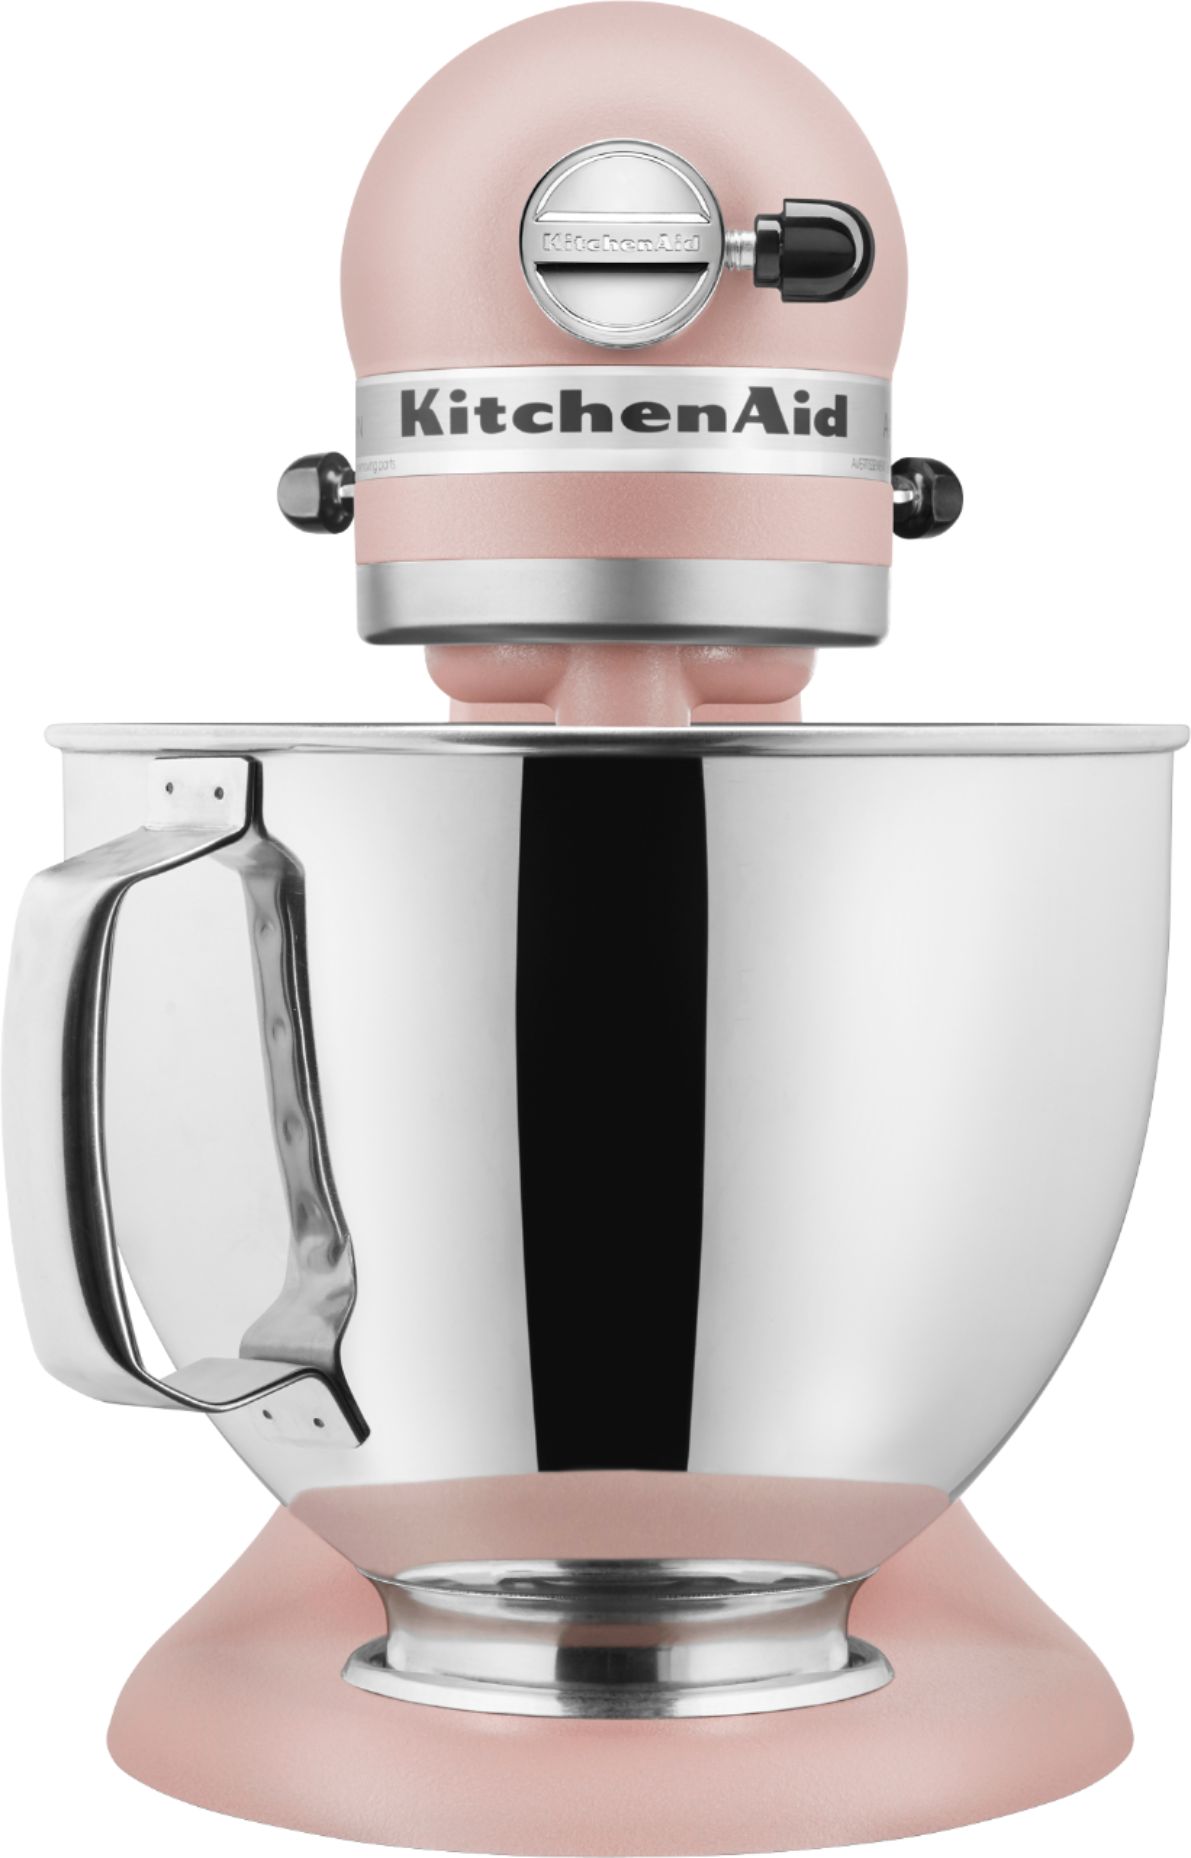 KitchenAid KSM150PSPK Artisan Series 5-Qt. Stand Mixer - Pink (Used) 